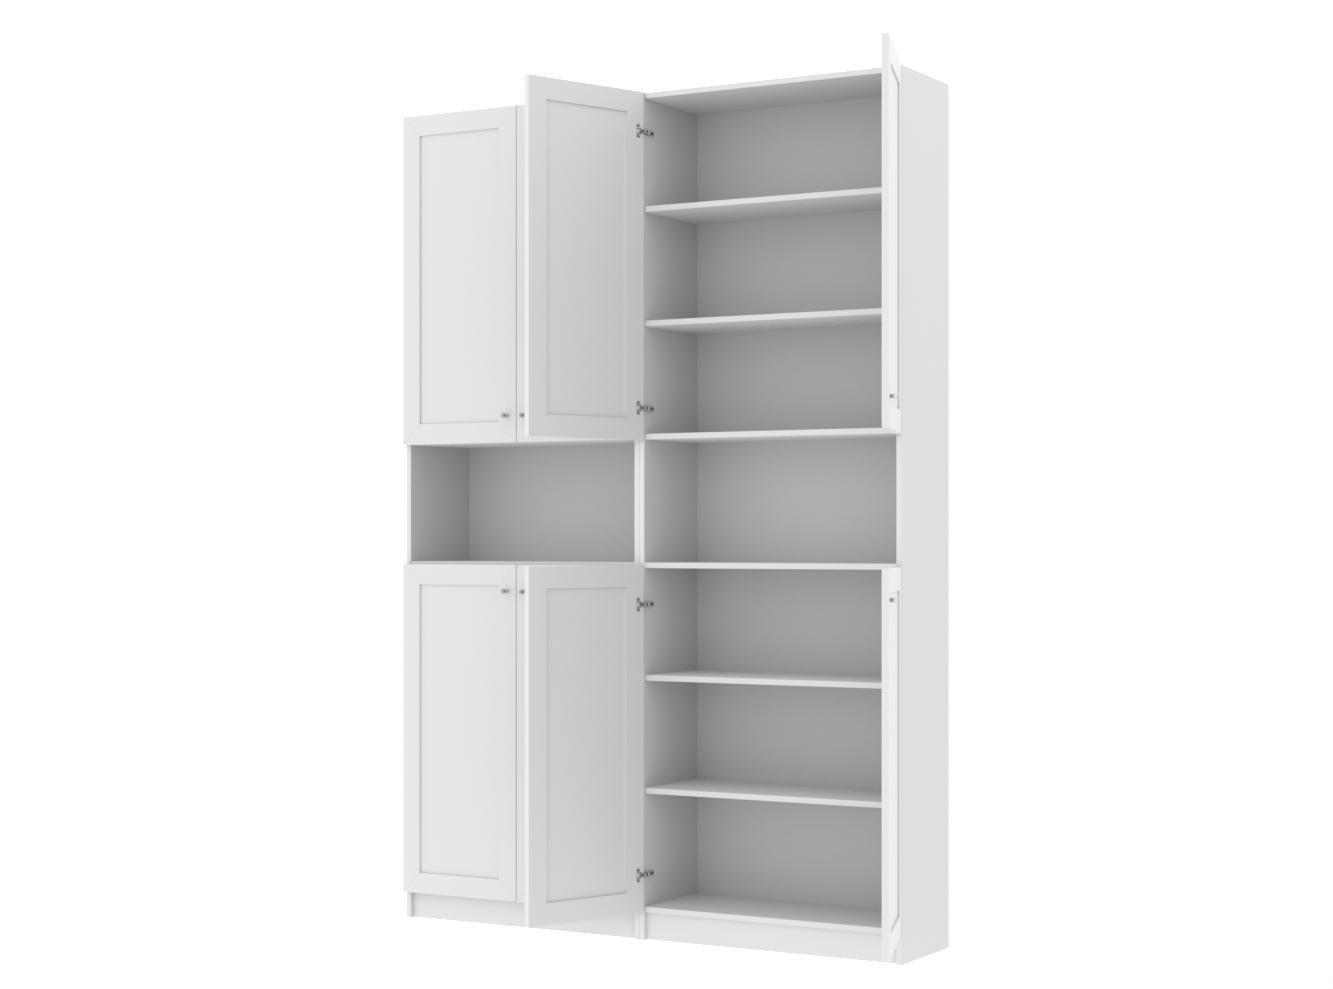 Книжный шкаф Билли 351 white ИКЕА (IKEA) изображение товара